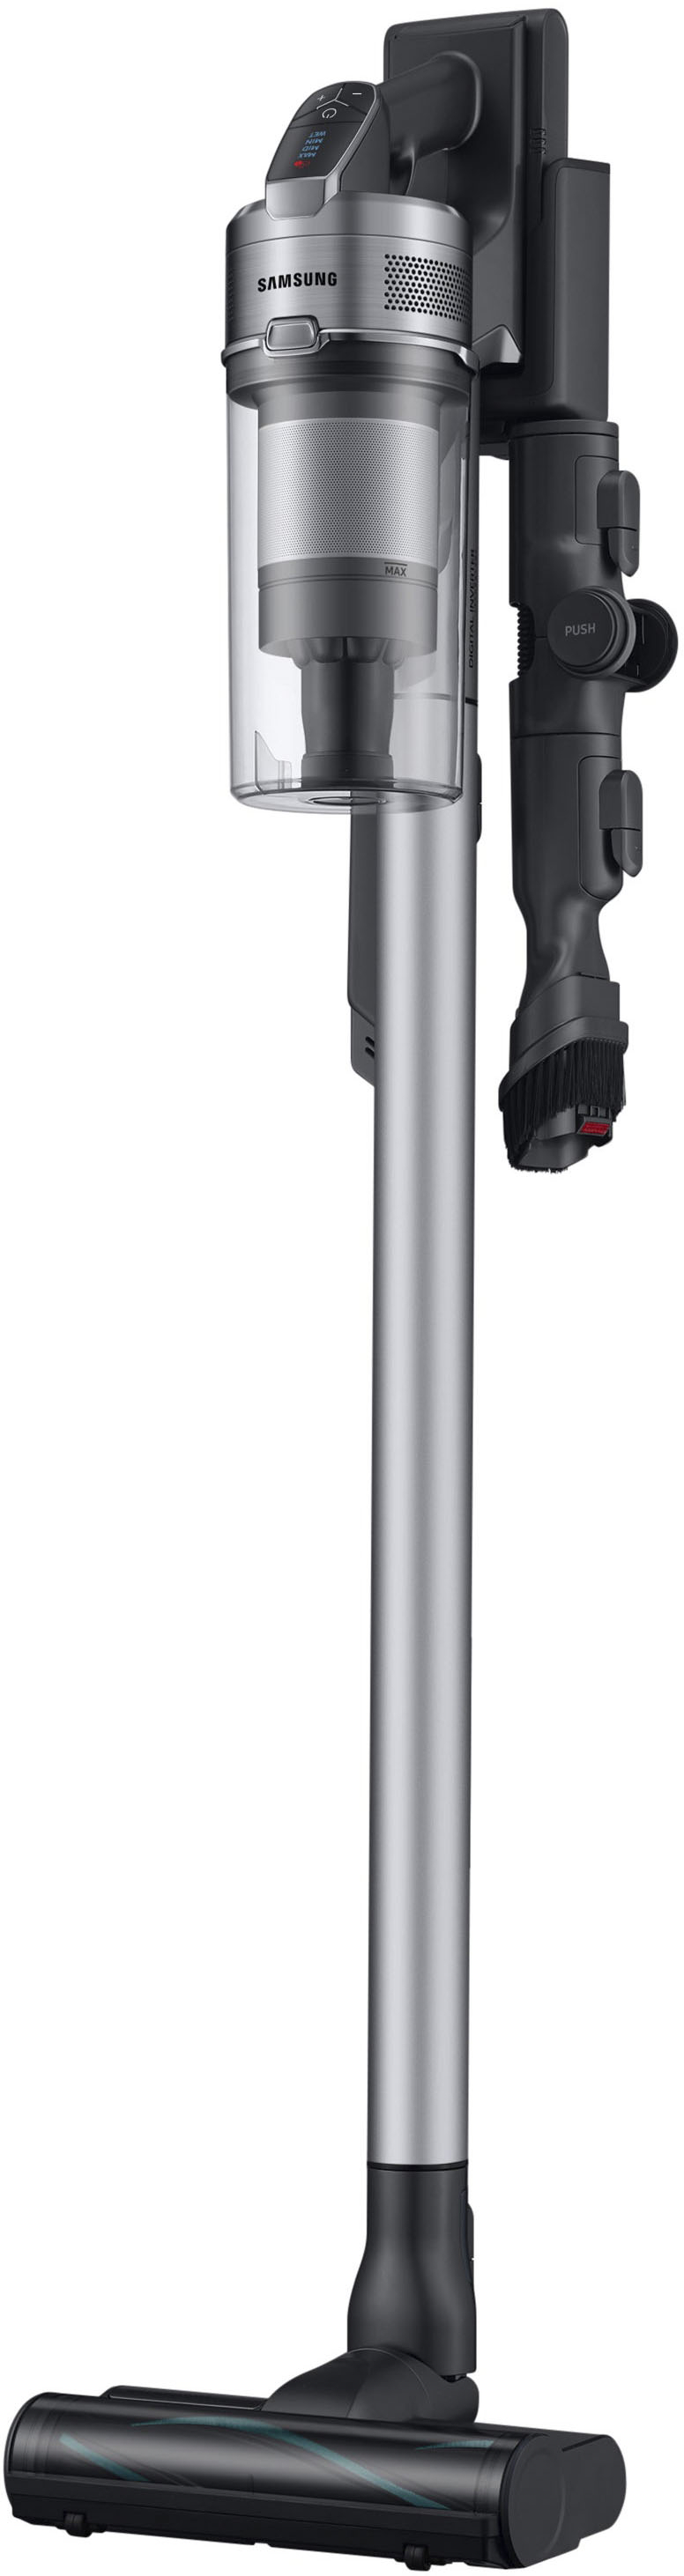 Samsung Jet 75 Cordless Vacuum VS20T7511T5/AA Buy ChroMetal - Stick Best Titan